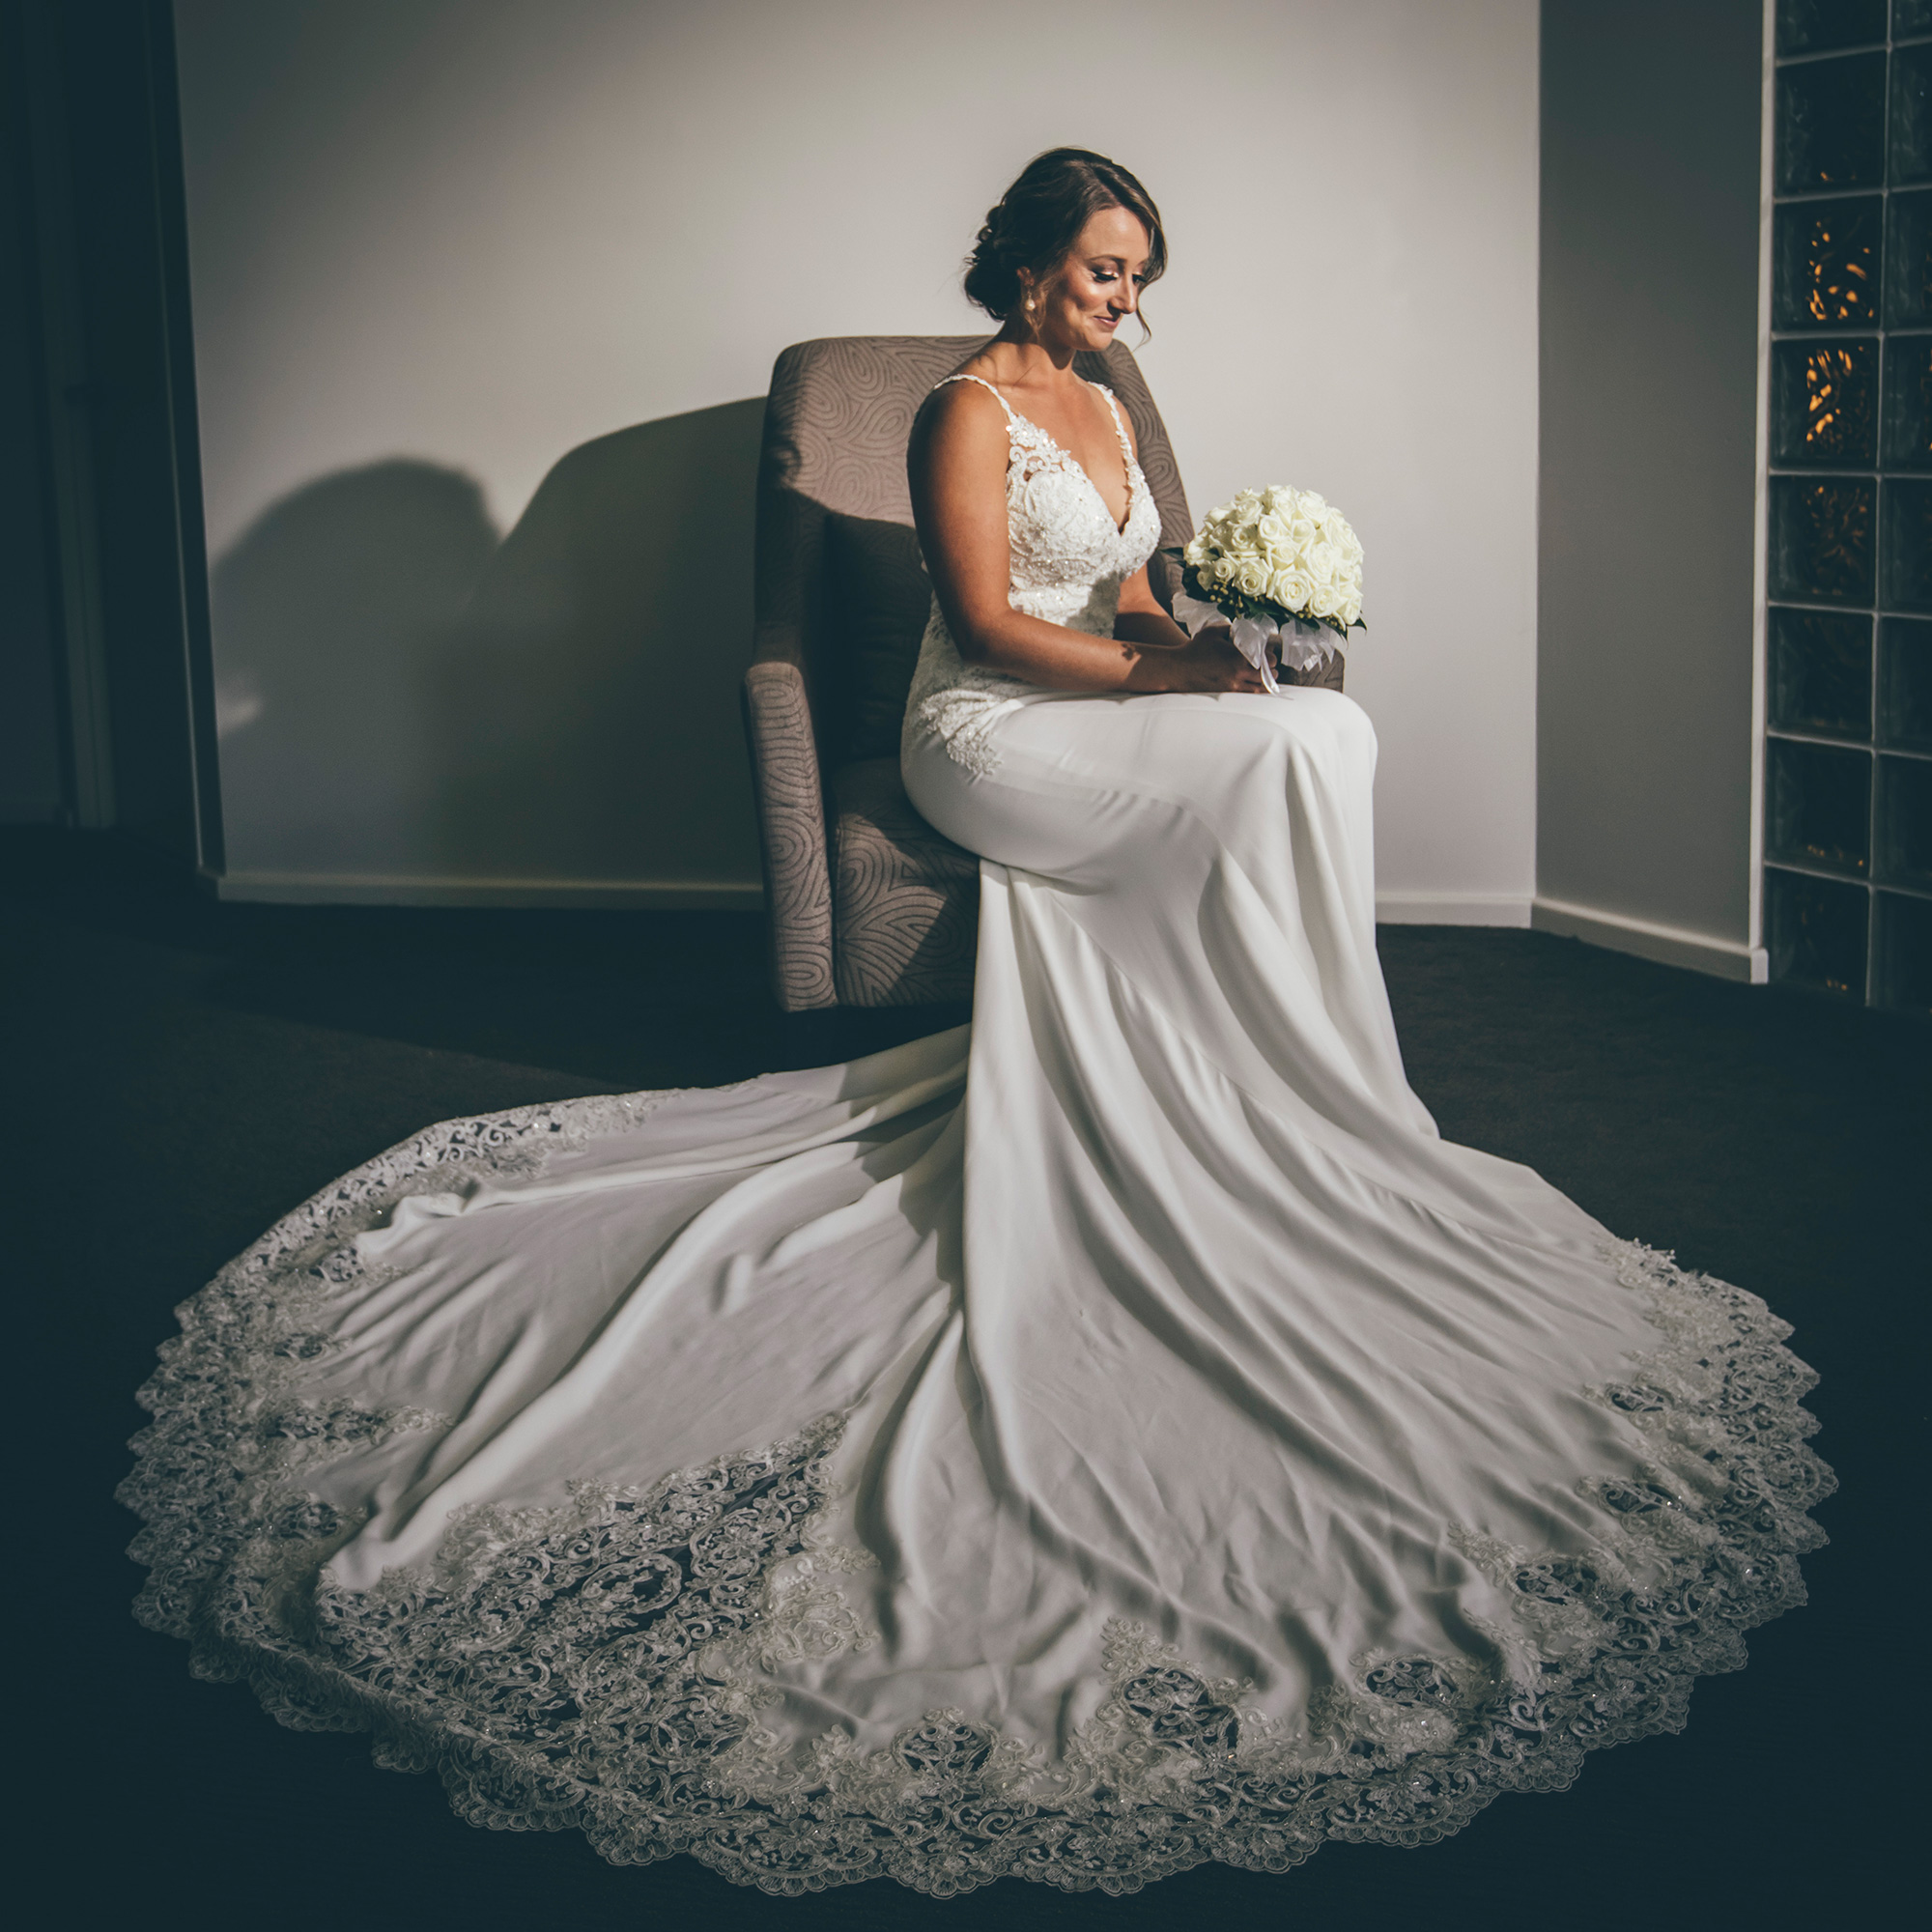 Stacey_Karl_Elegant-Fremantle-Wedding_007